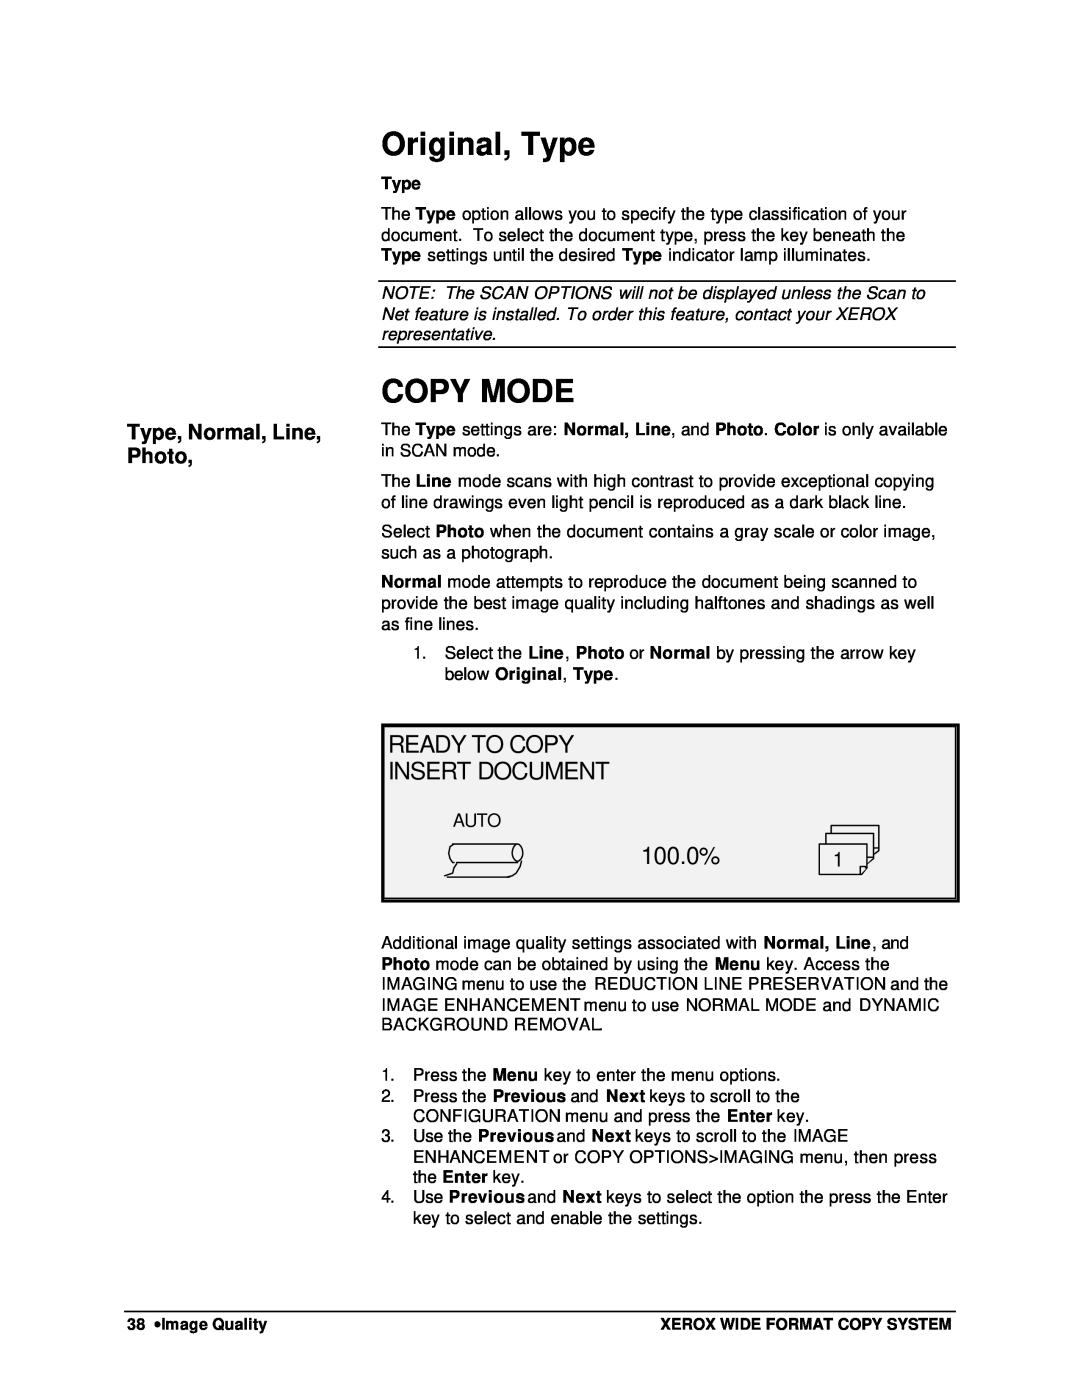 Xerox 8825, 8850, 8830, X2 manual Original, Type, Copy Mode, Ready To Copy Insert Document, 100.0%1, Auto 